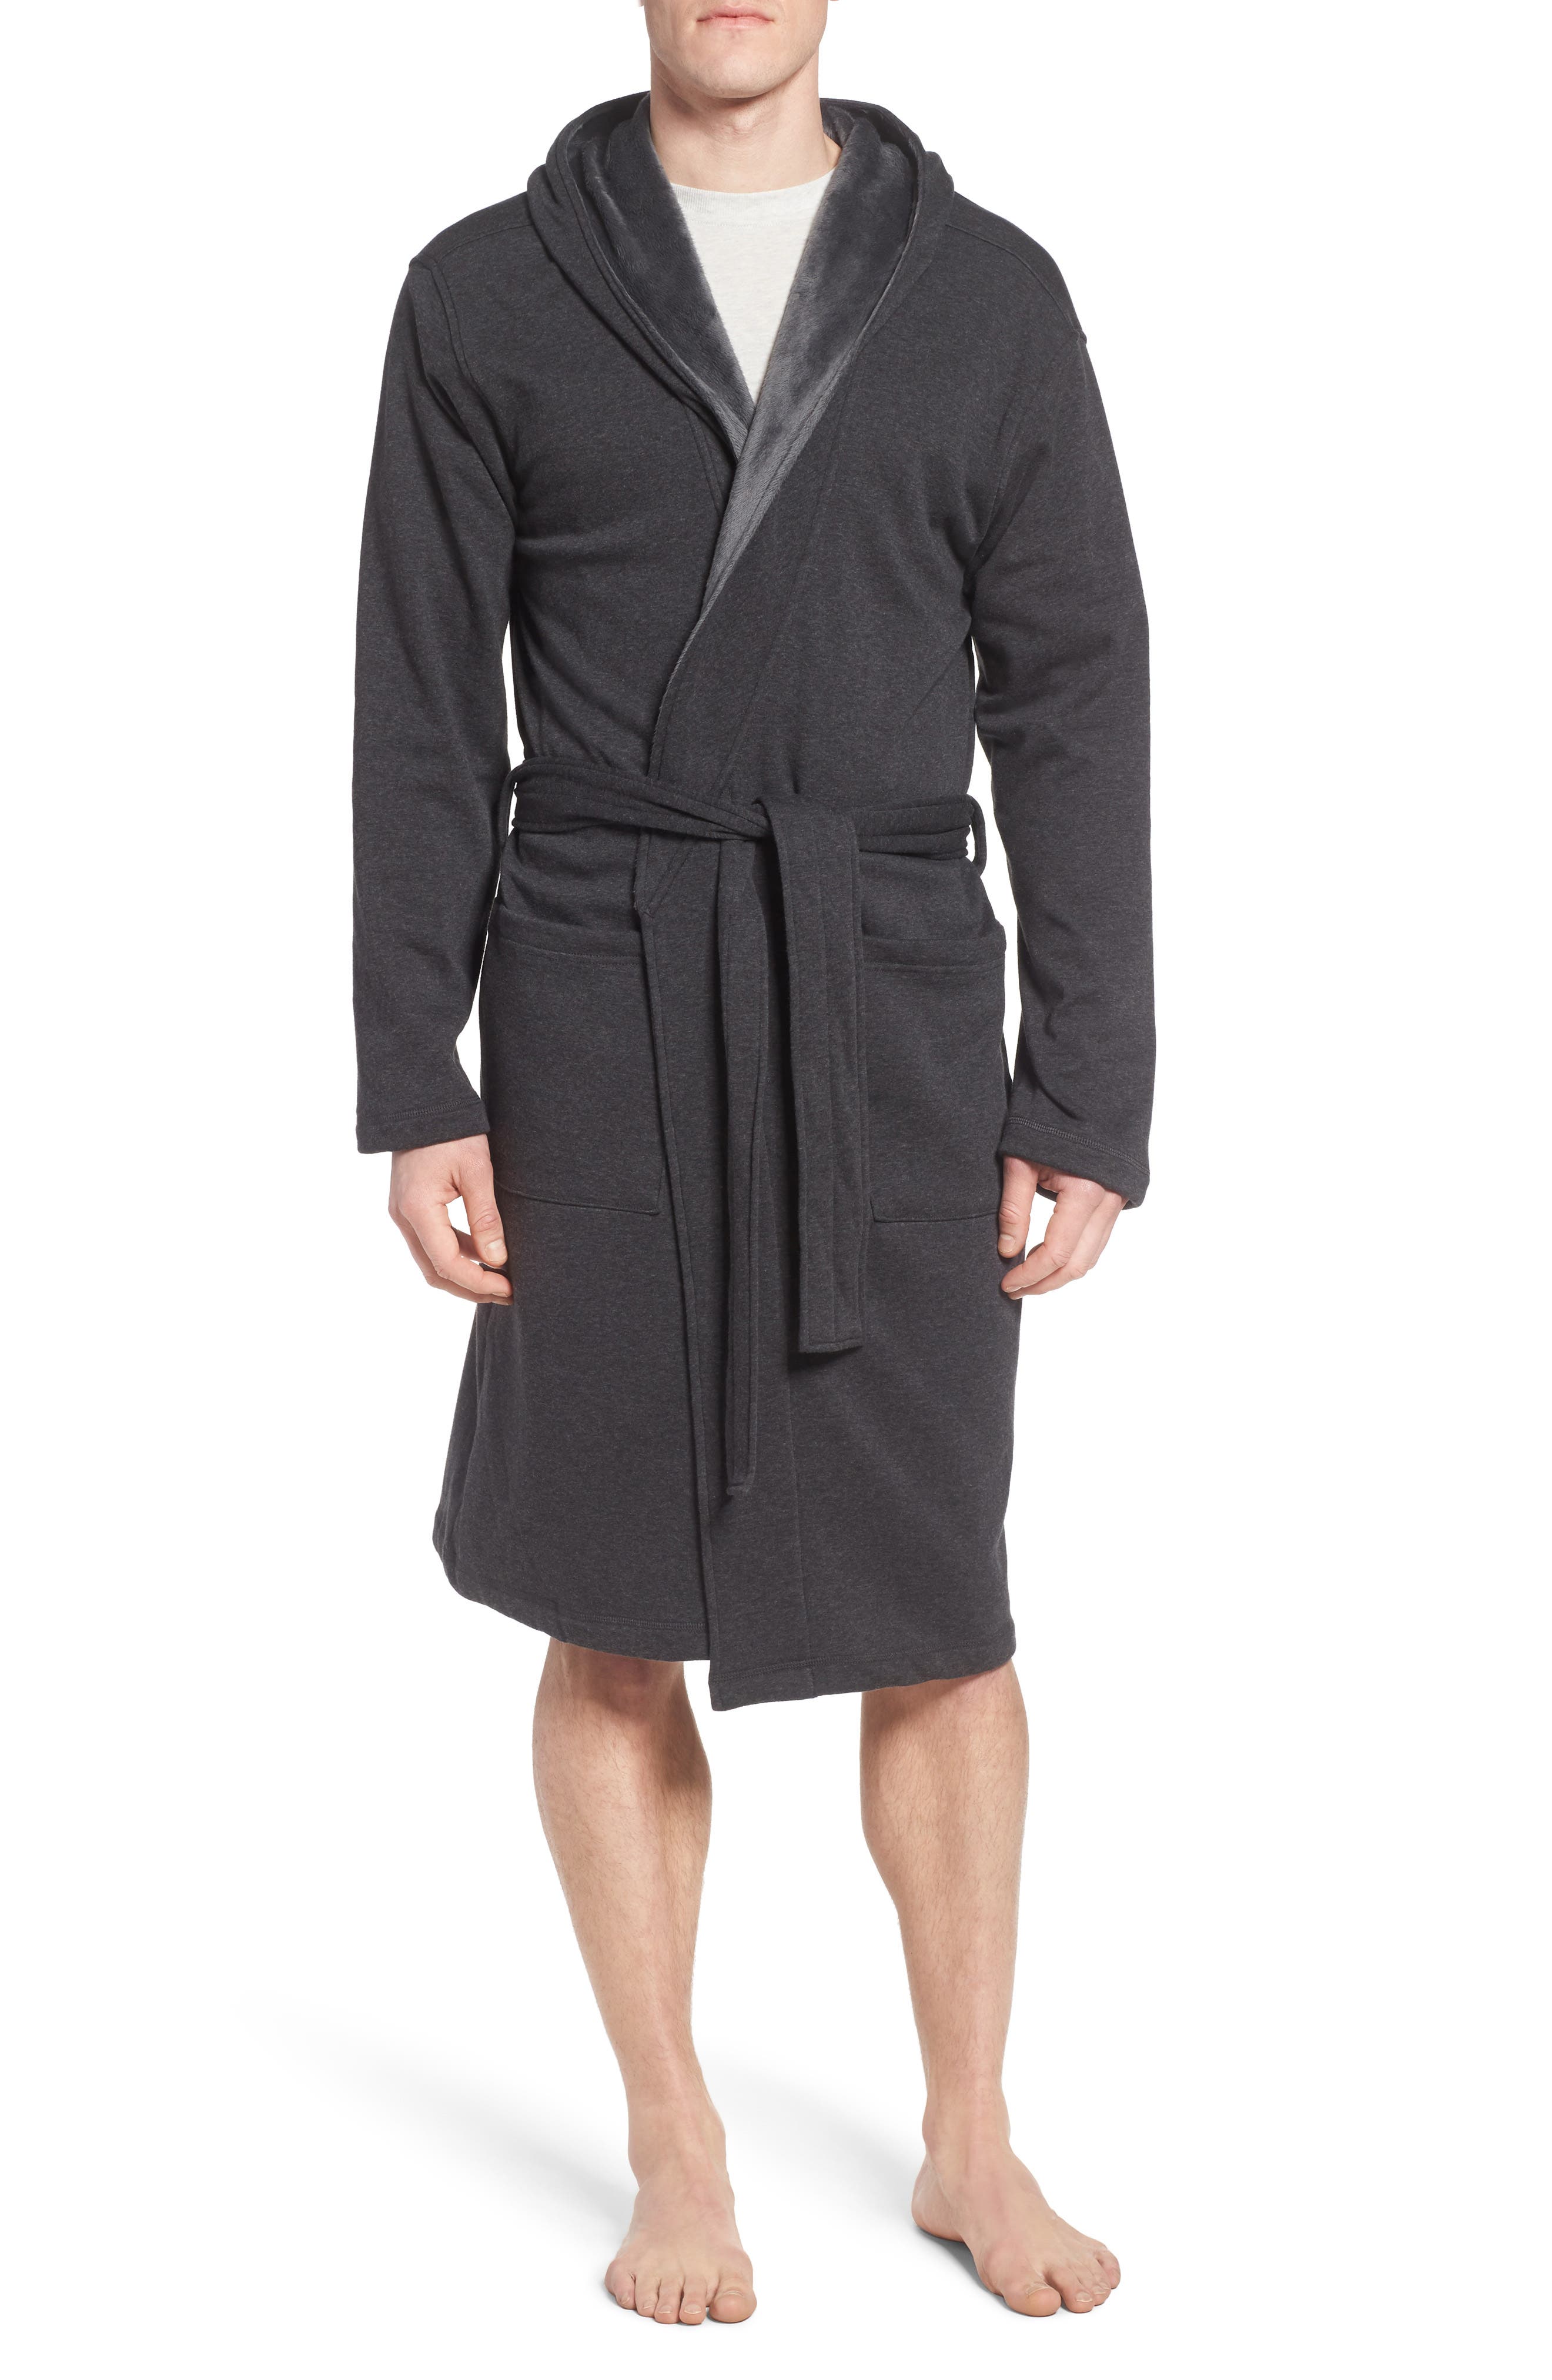 ugg hooded bathrobe